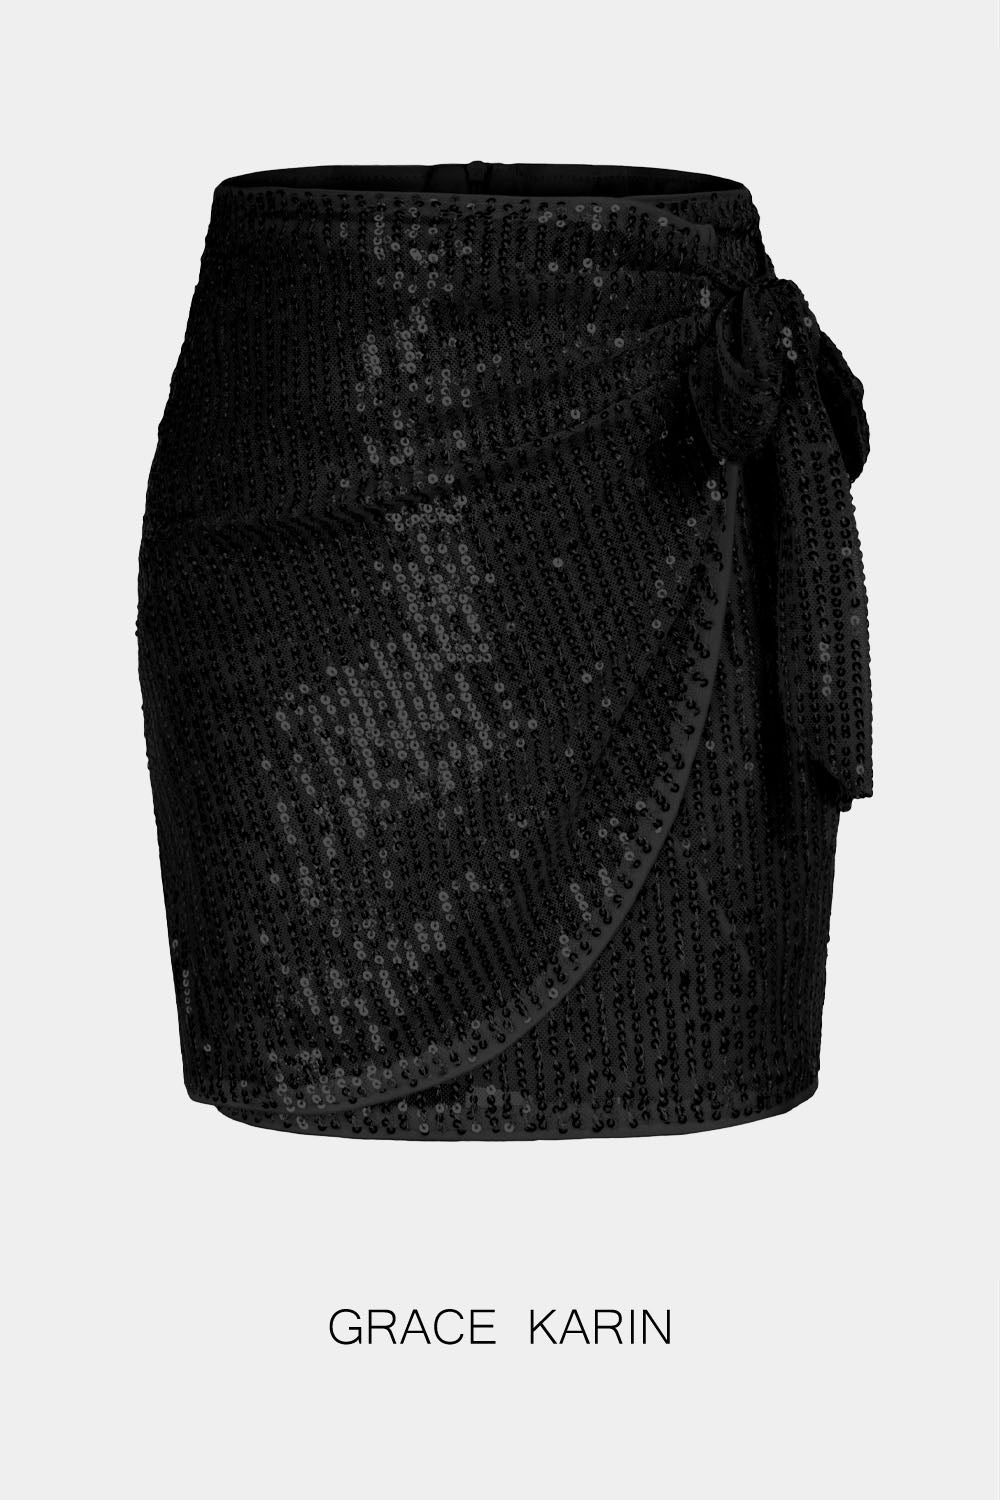 【$19.99 Flash Sale!】GRACE KARIN Kids Sequined Mini Skirt Little Girls High Waist Bow-Knot Decorated Skirt